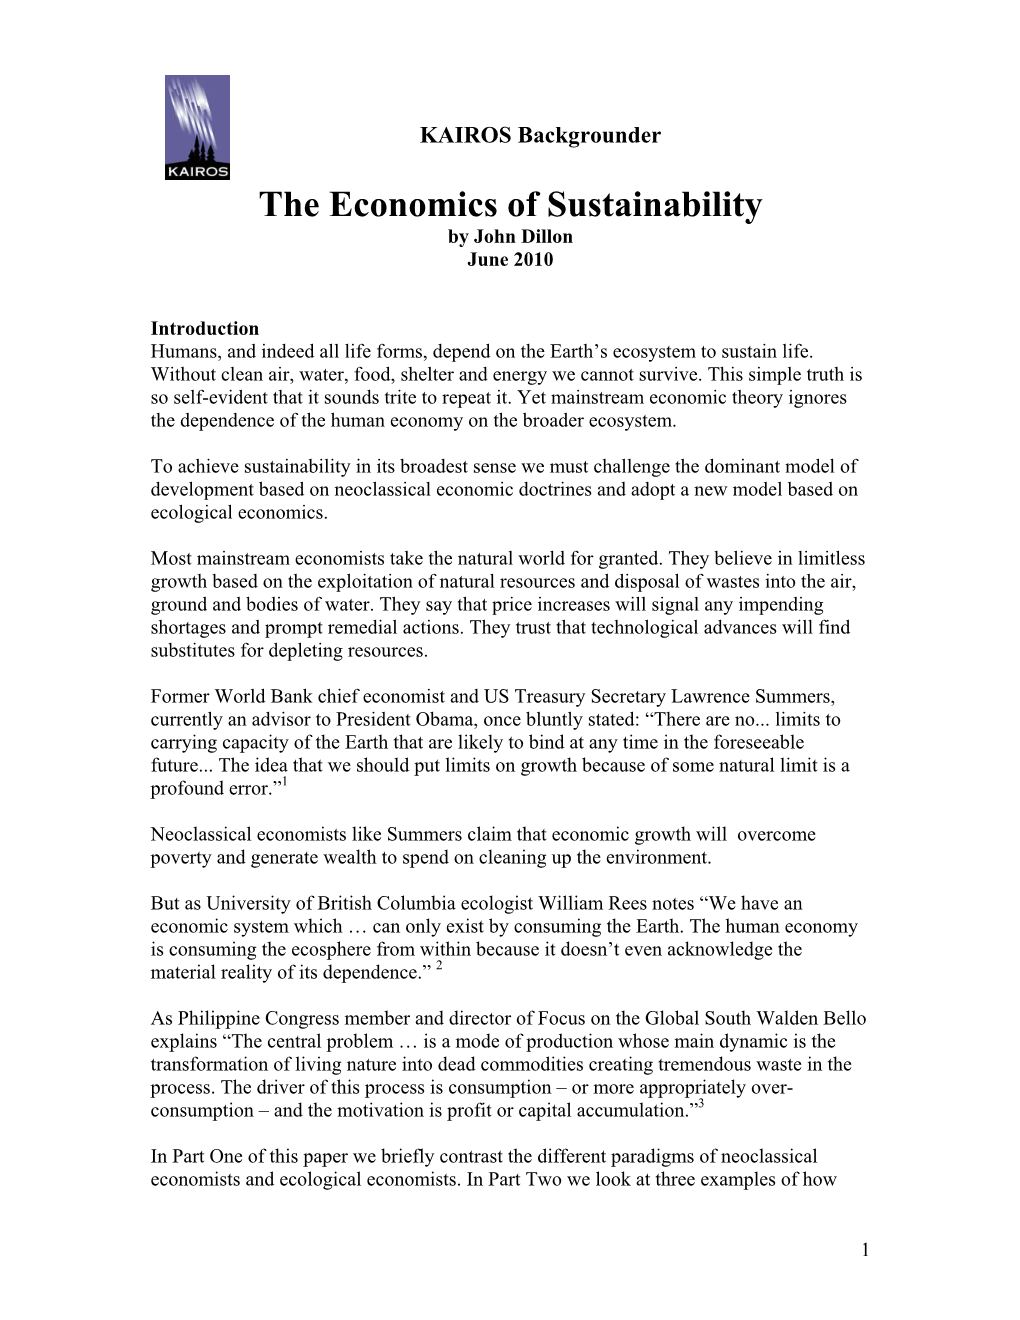 The Economics of Sustainability by John Dillon June 2010